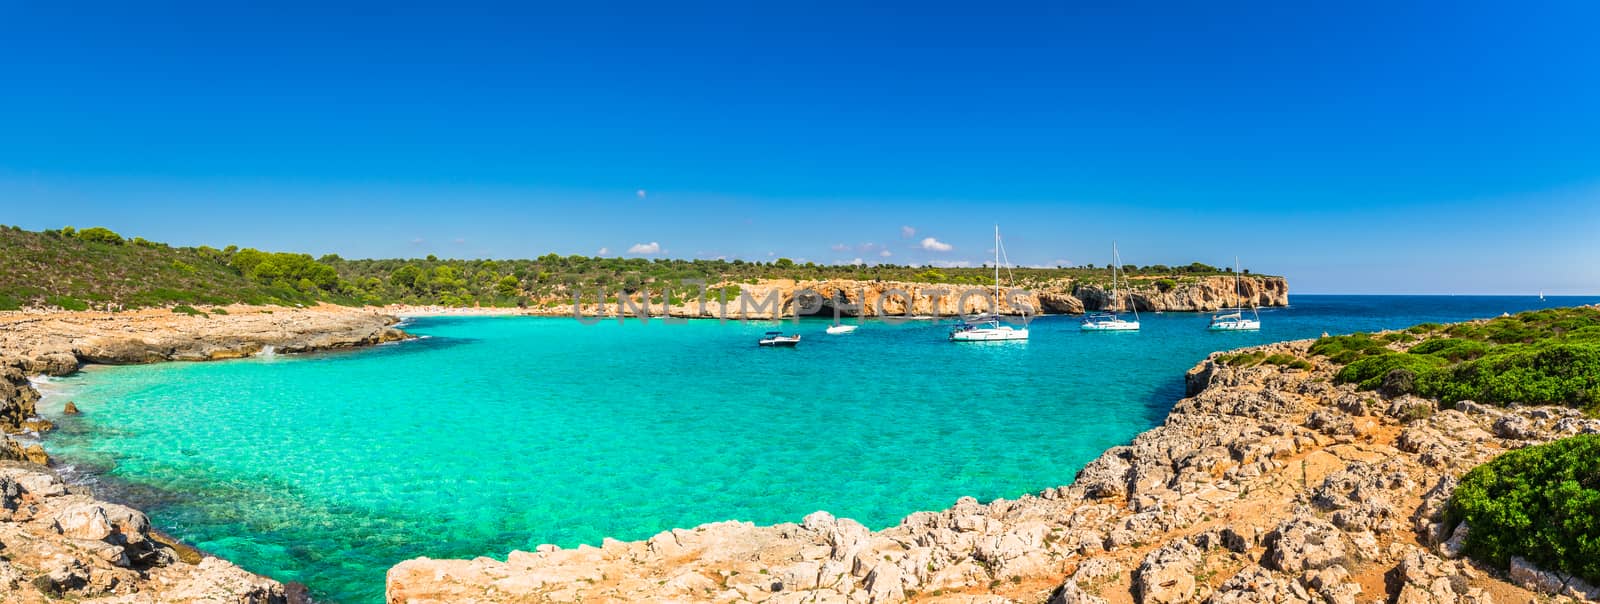 Spain Majorca, panorama of beautiful bay beach of Cala Varques, Spain Mediterranean Sea by Vulcano